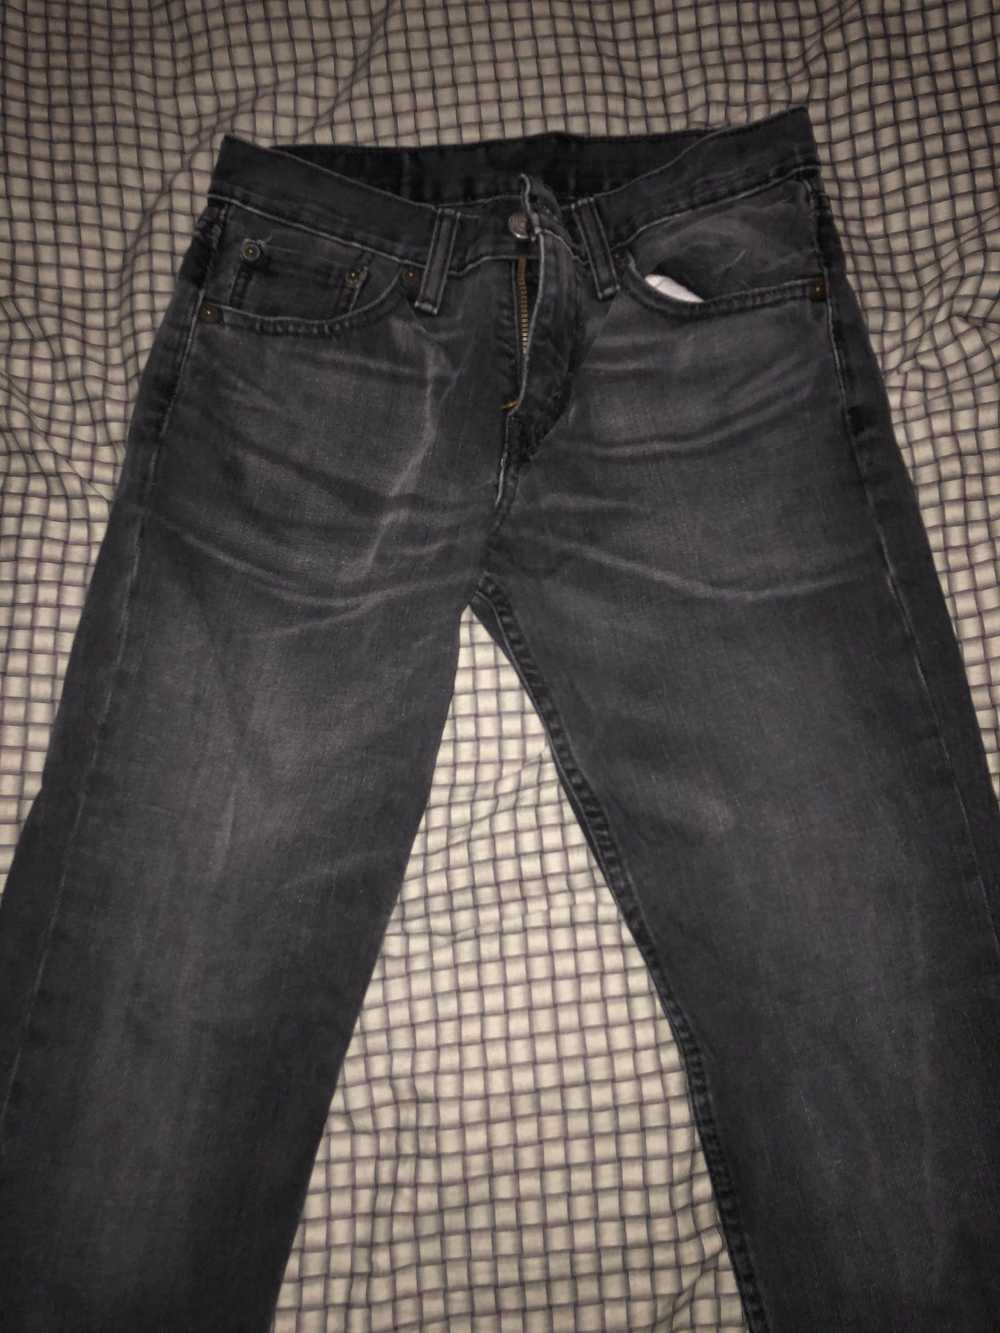 Levi's Black levi jeans - image 3